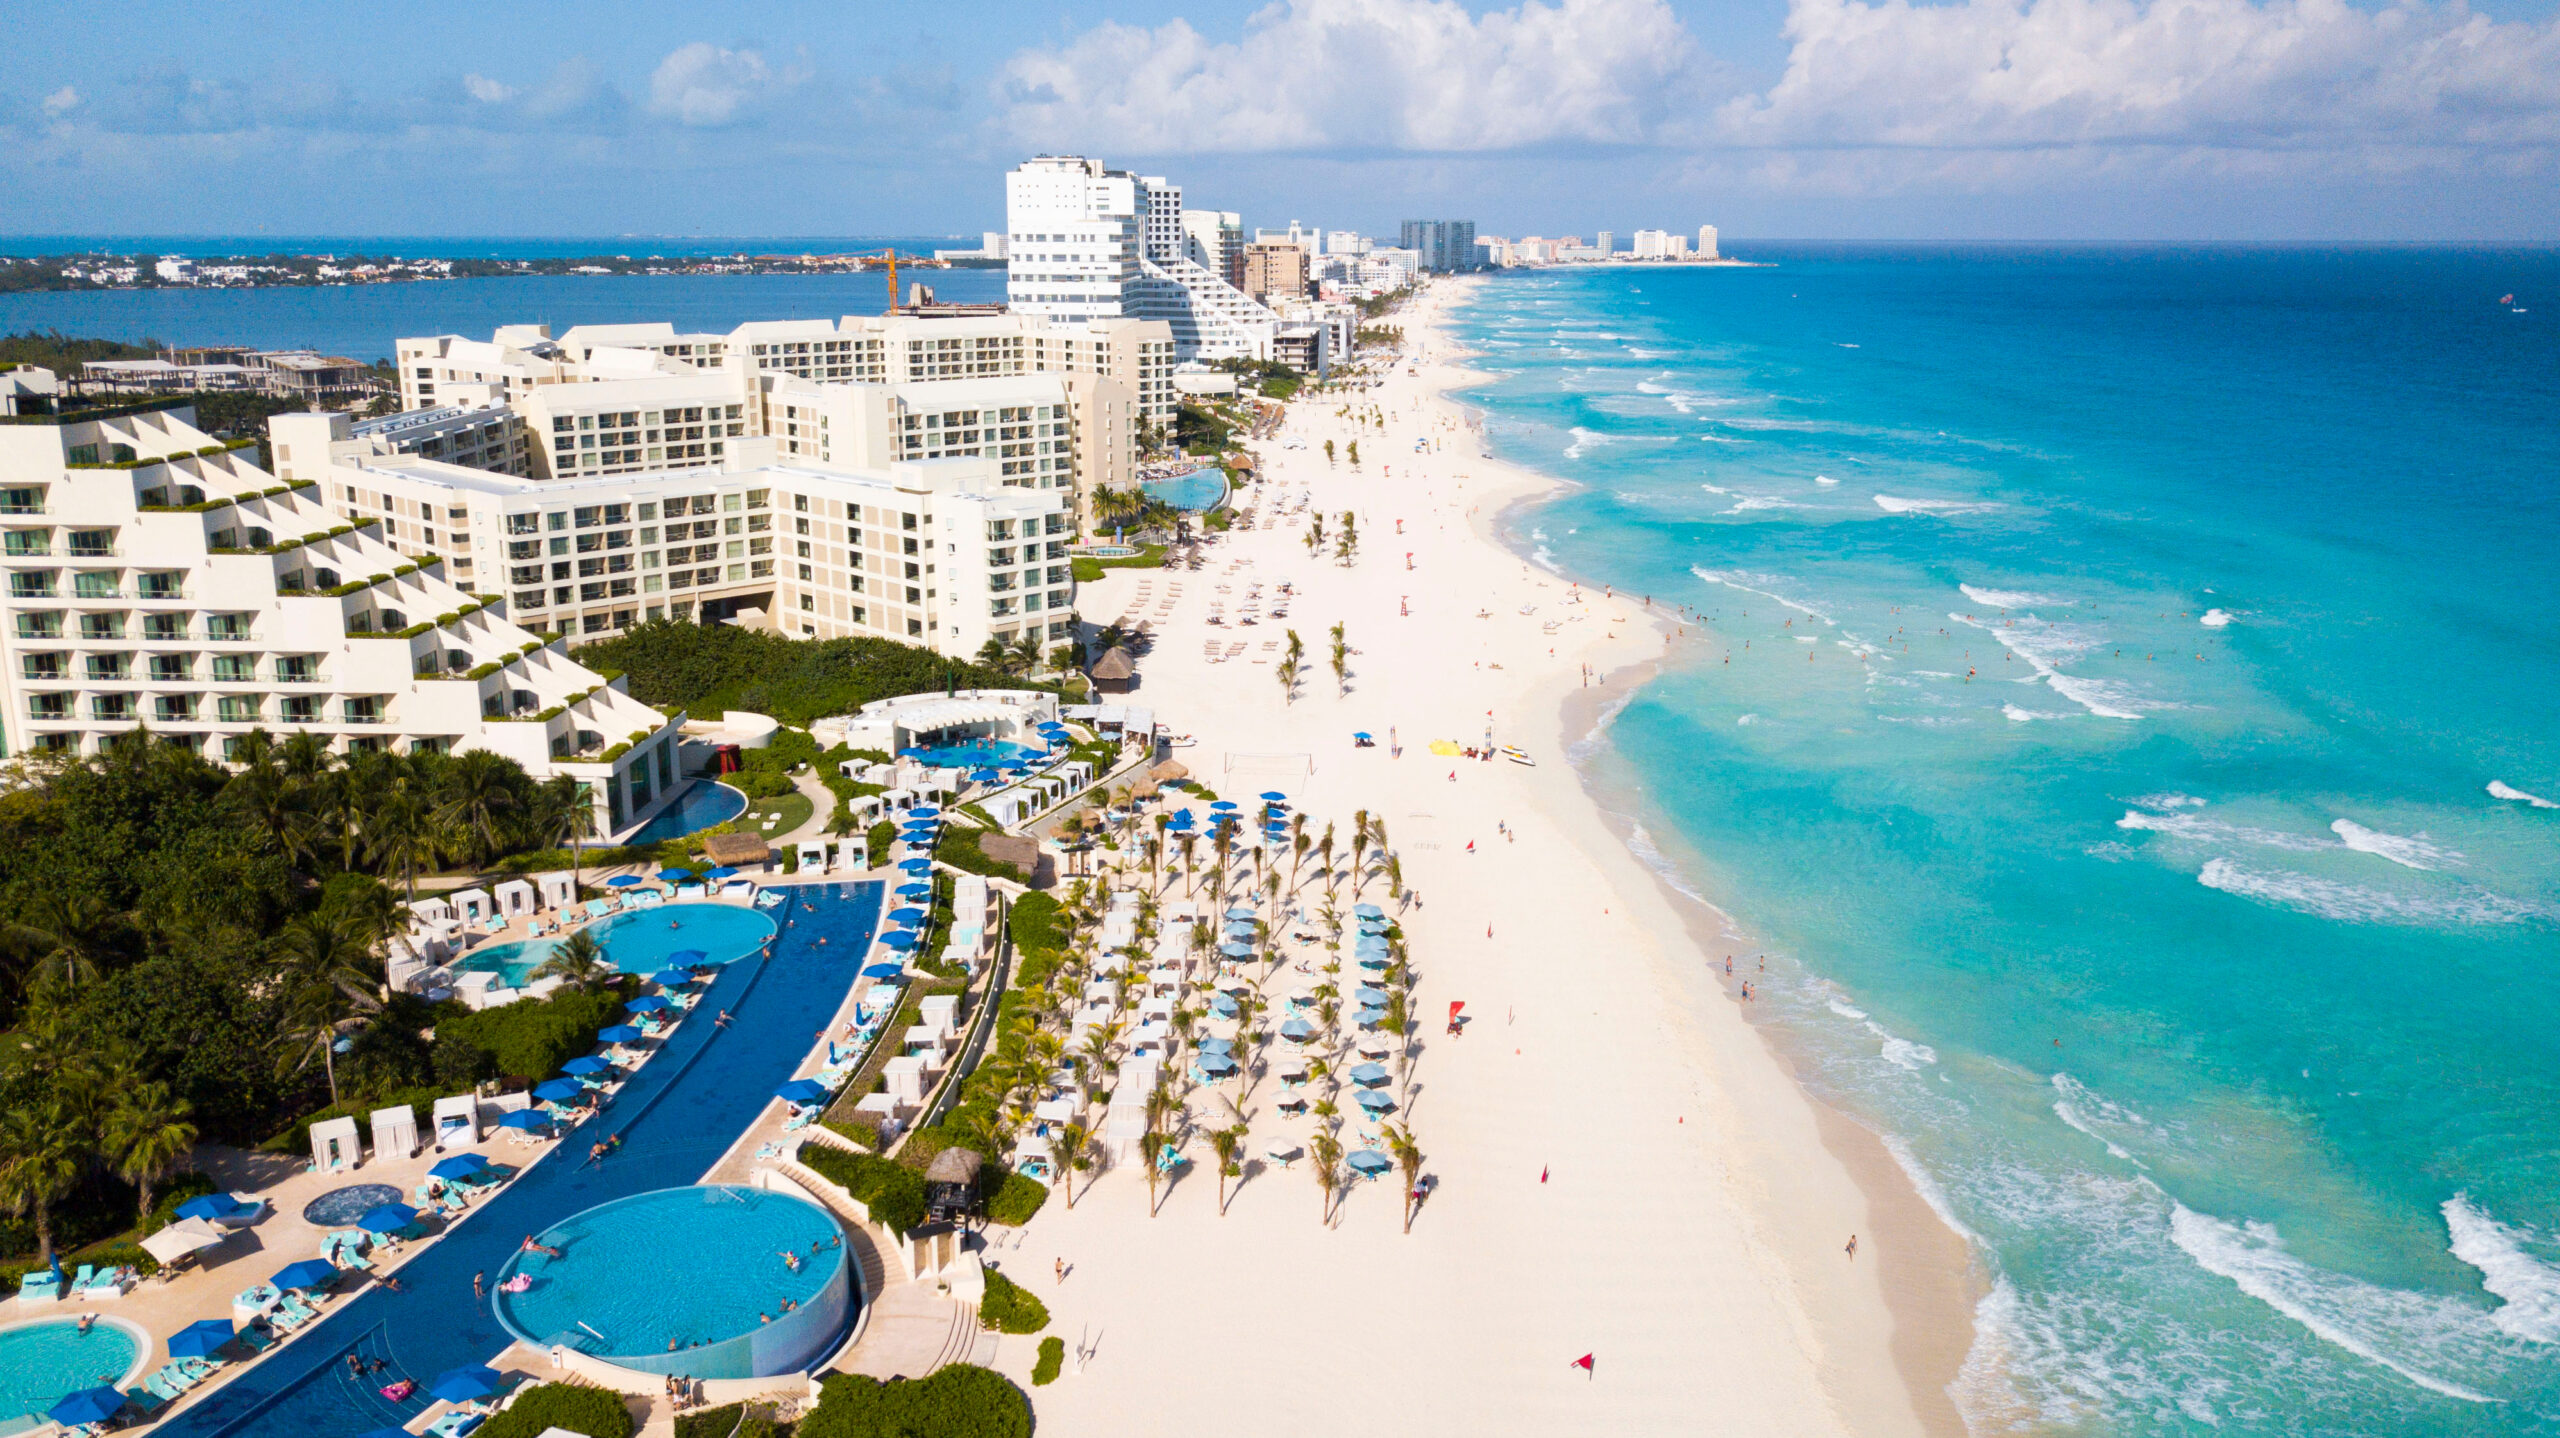 Cancun, Mexico (Photo Credit: SVongpra / Shutterstock)